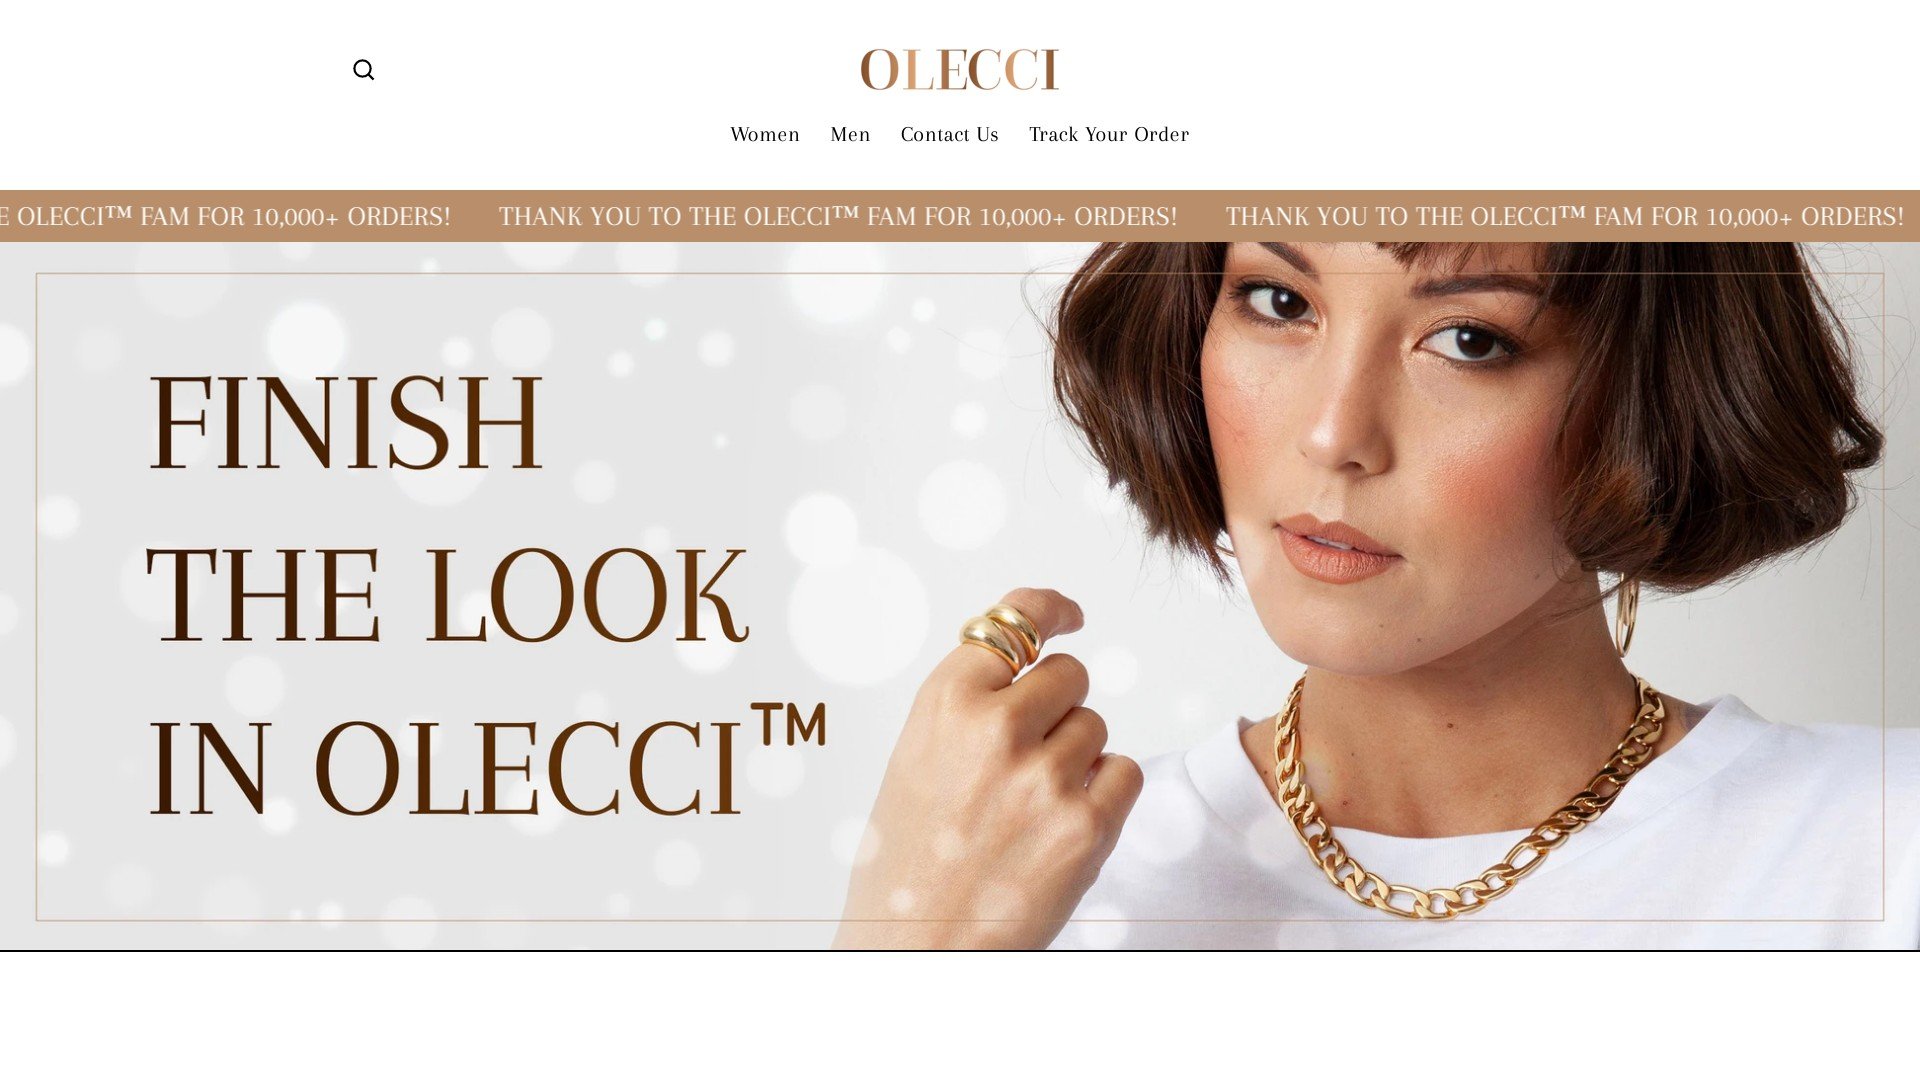 Olecci at olecci.com